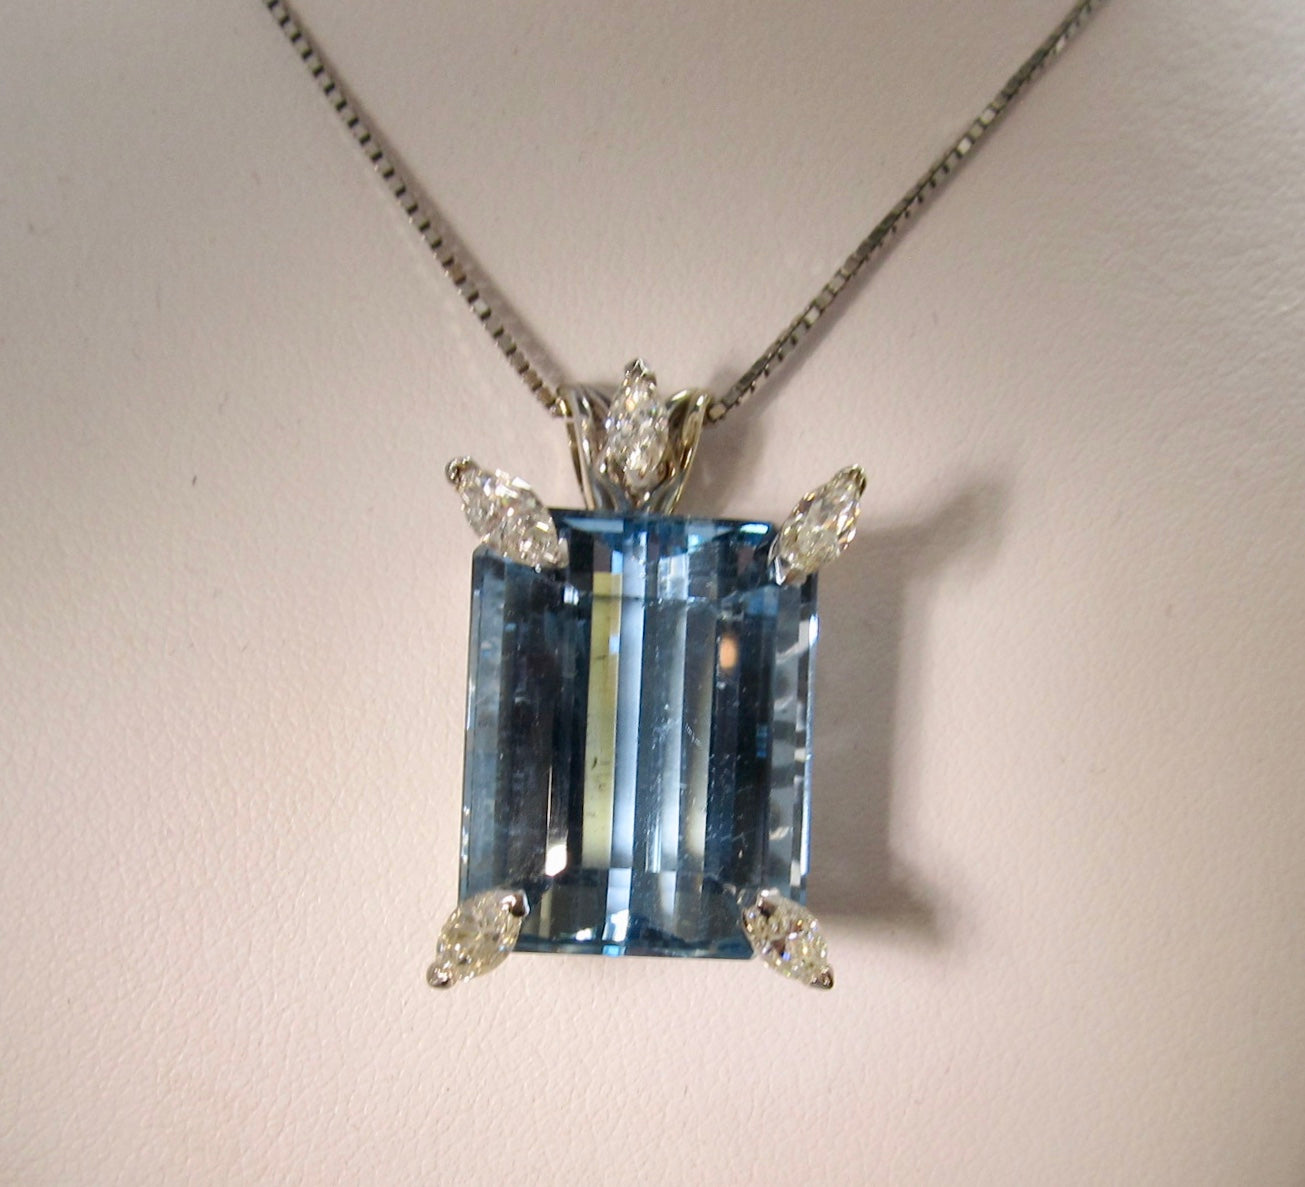 Victorious Cape May, aquamarine diamond necklace